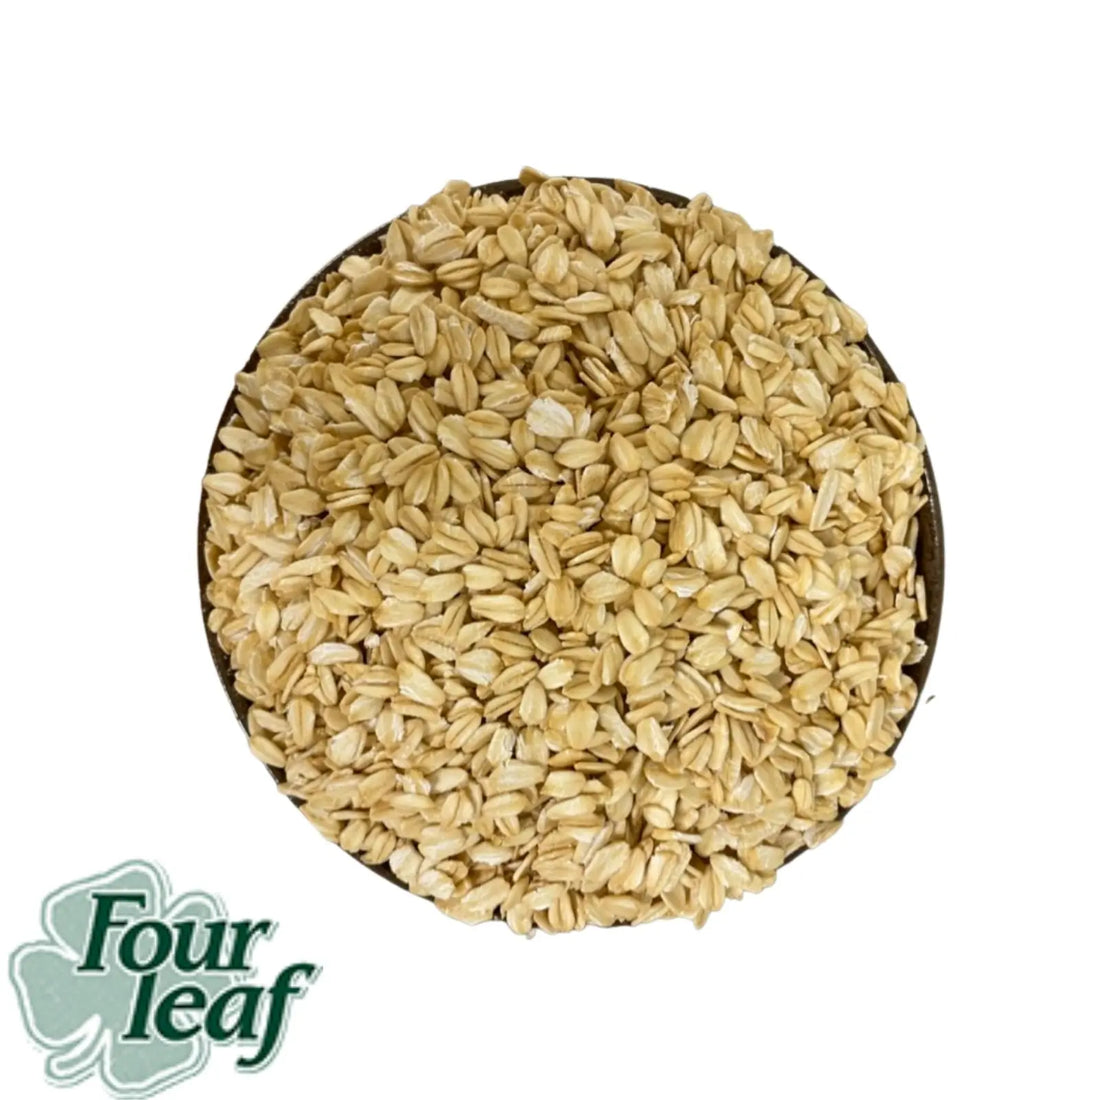 Rolled Oats Chewy Organic 20kg-Pulse & Grain-Four Leaf Milling-Sovereign Foods-Australian Grown-Bulk Foods